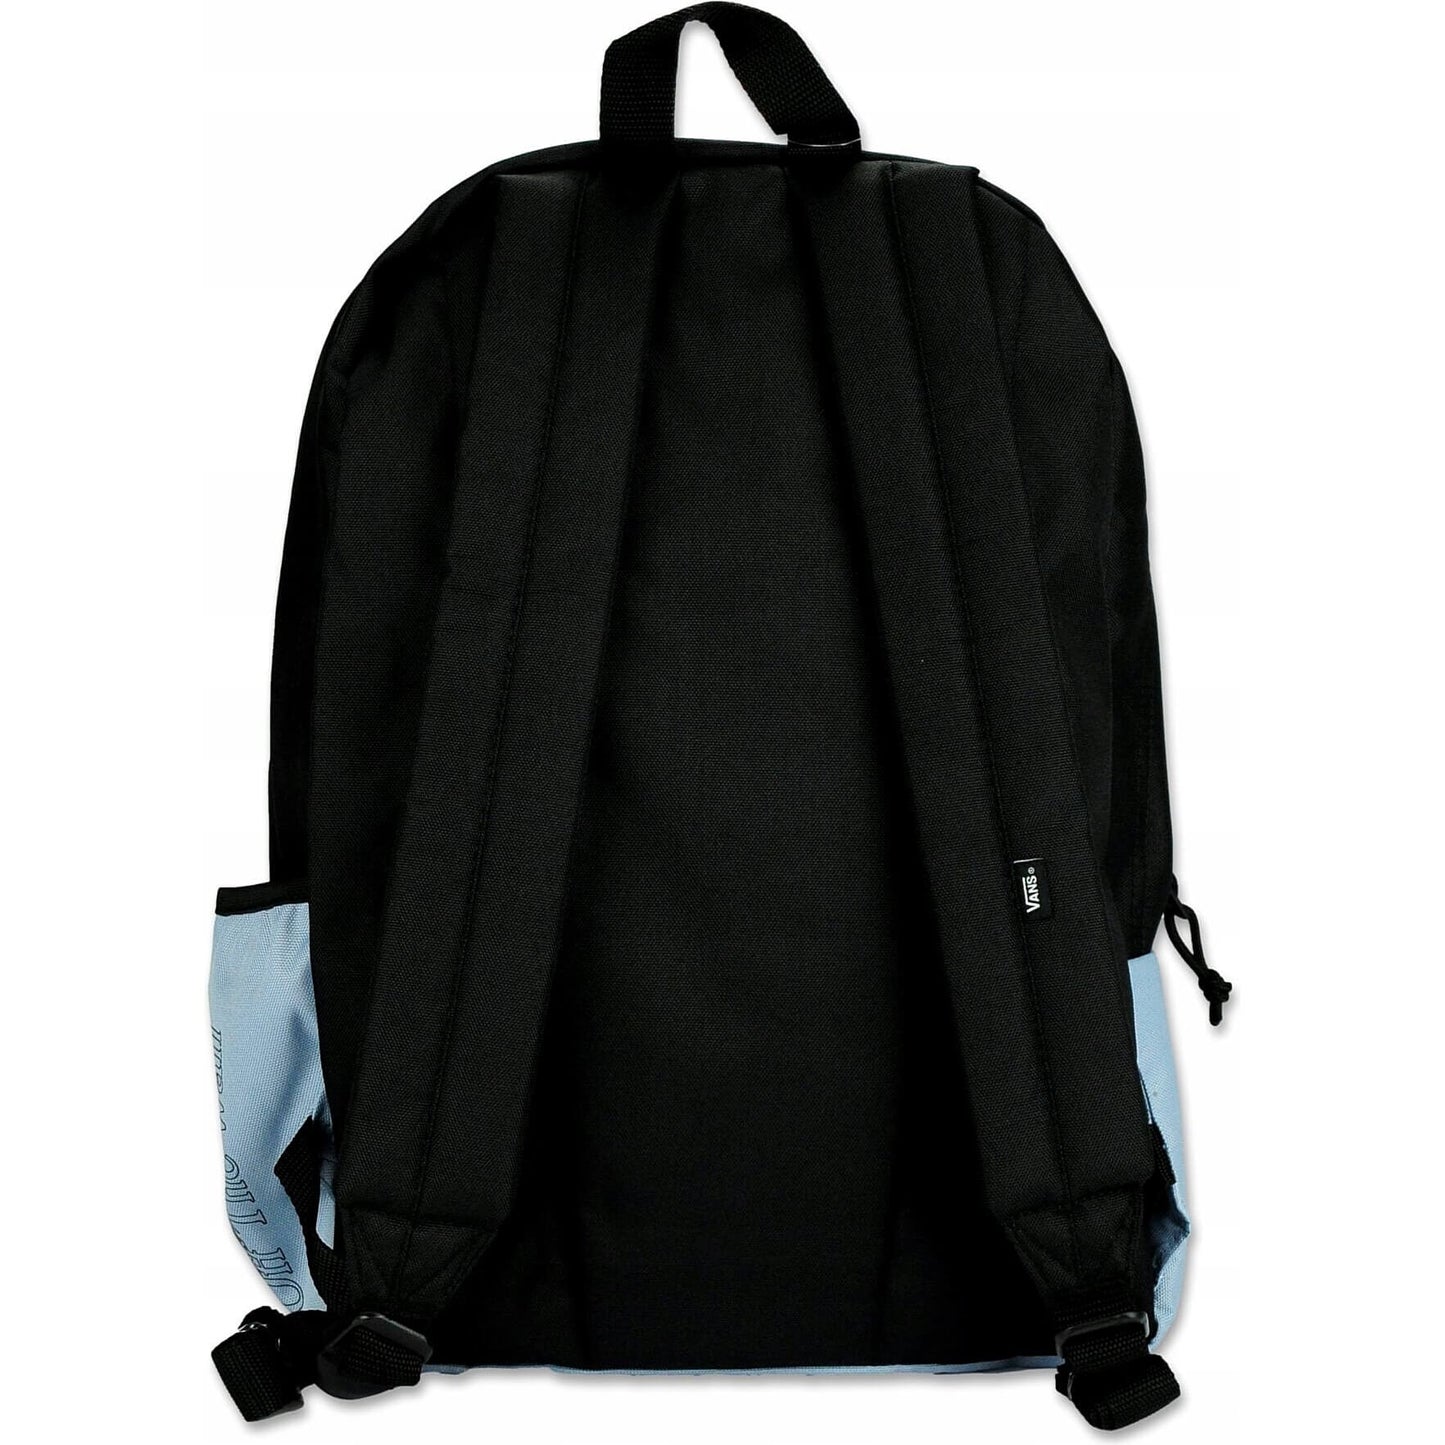 Vans Wm Street Sport Realm Backpack Ashley Blue